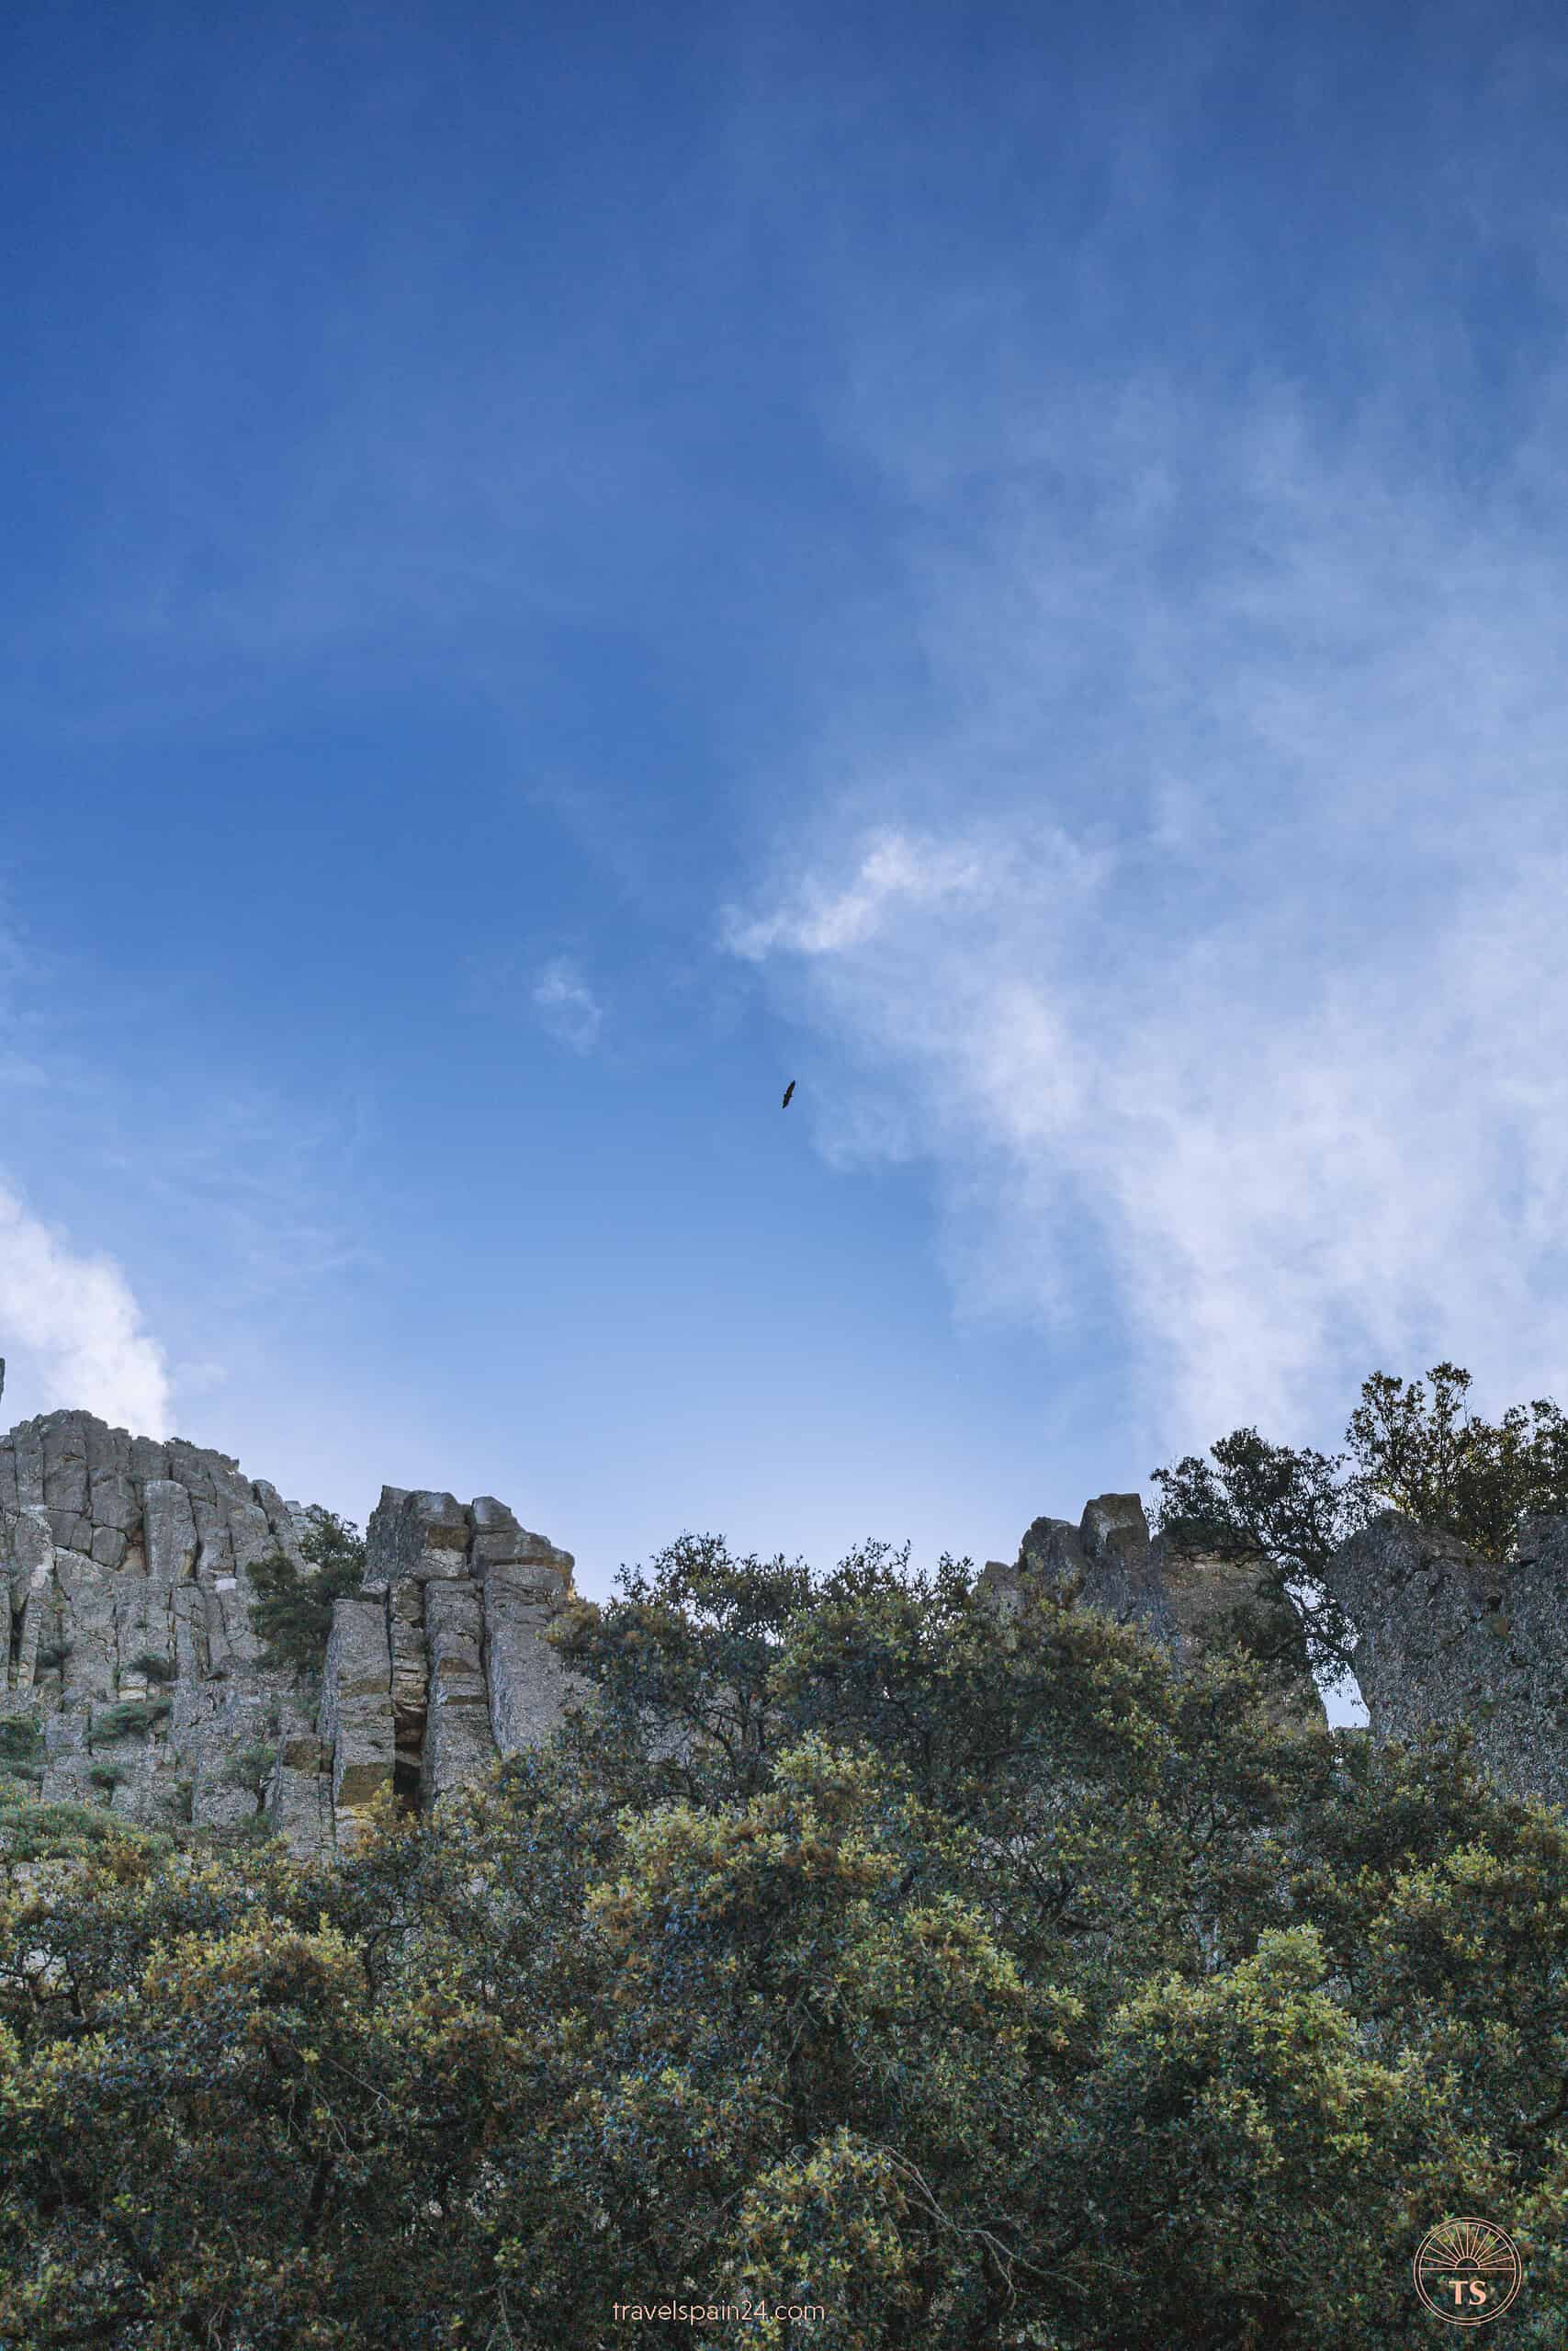 Griffon Vulture soaring above the rocky mountains of Monfragüe National Park, showcasing the park's rich biodiversity.